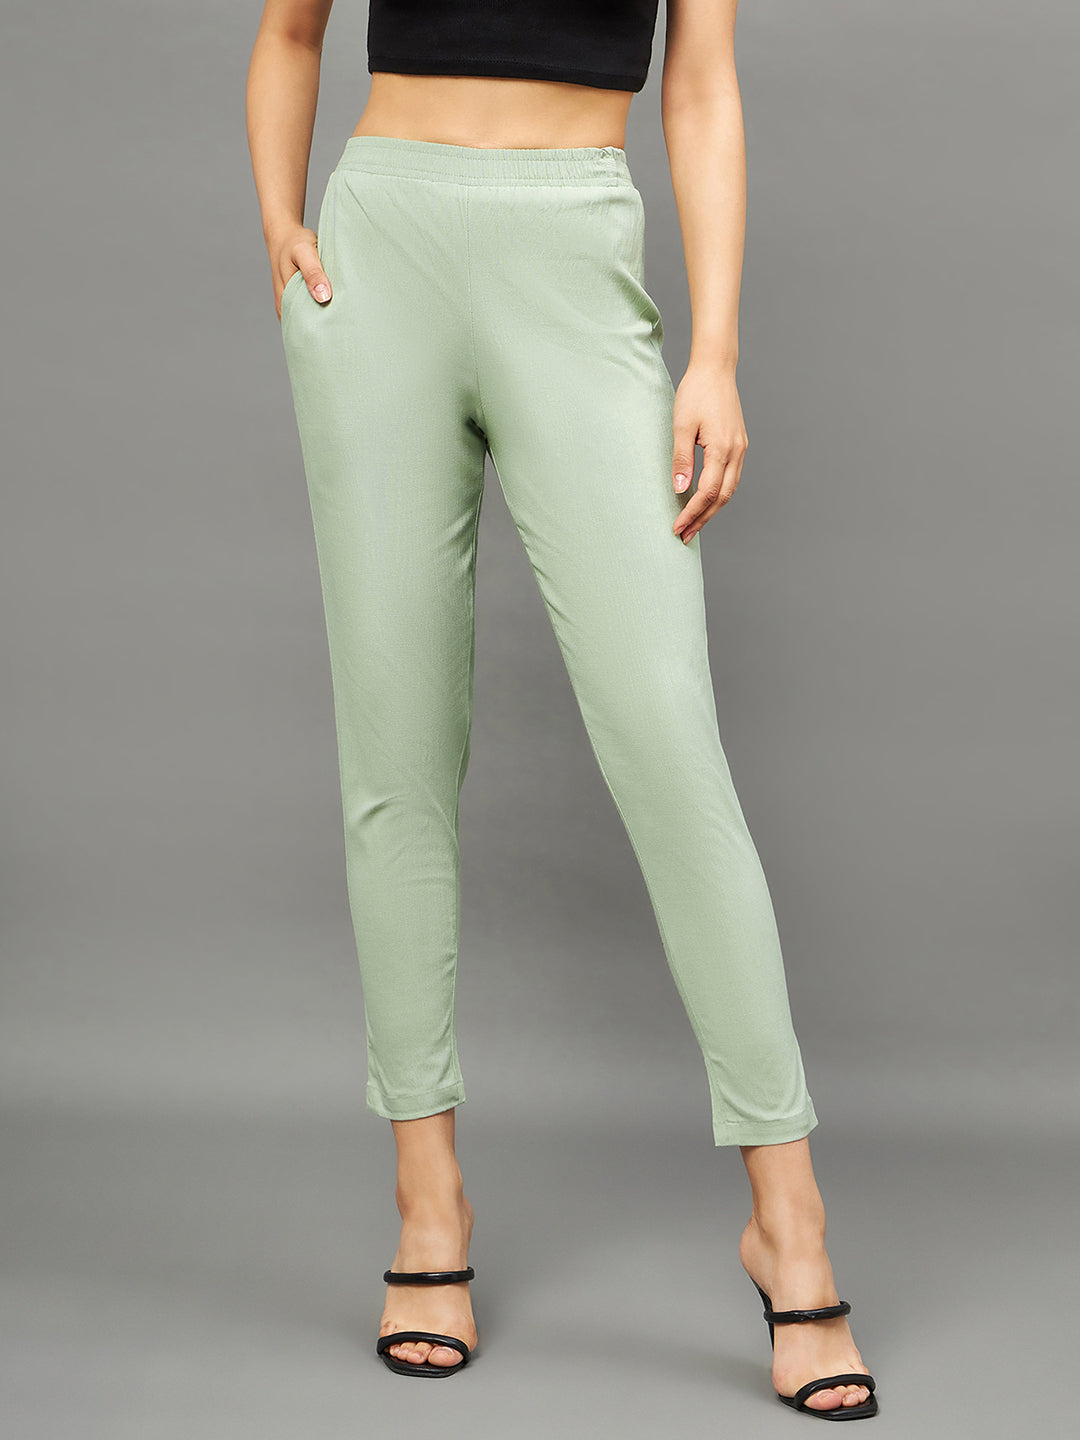 Details more than 187 green top combination leggings super hot